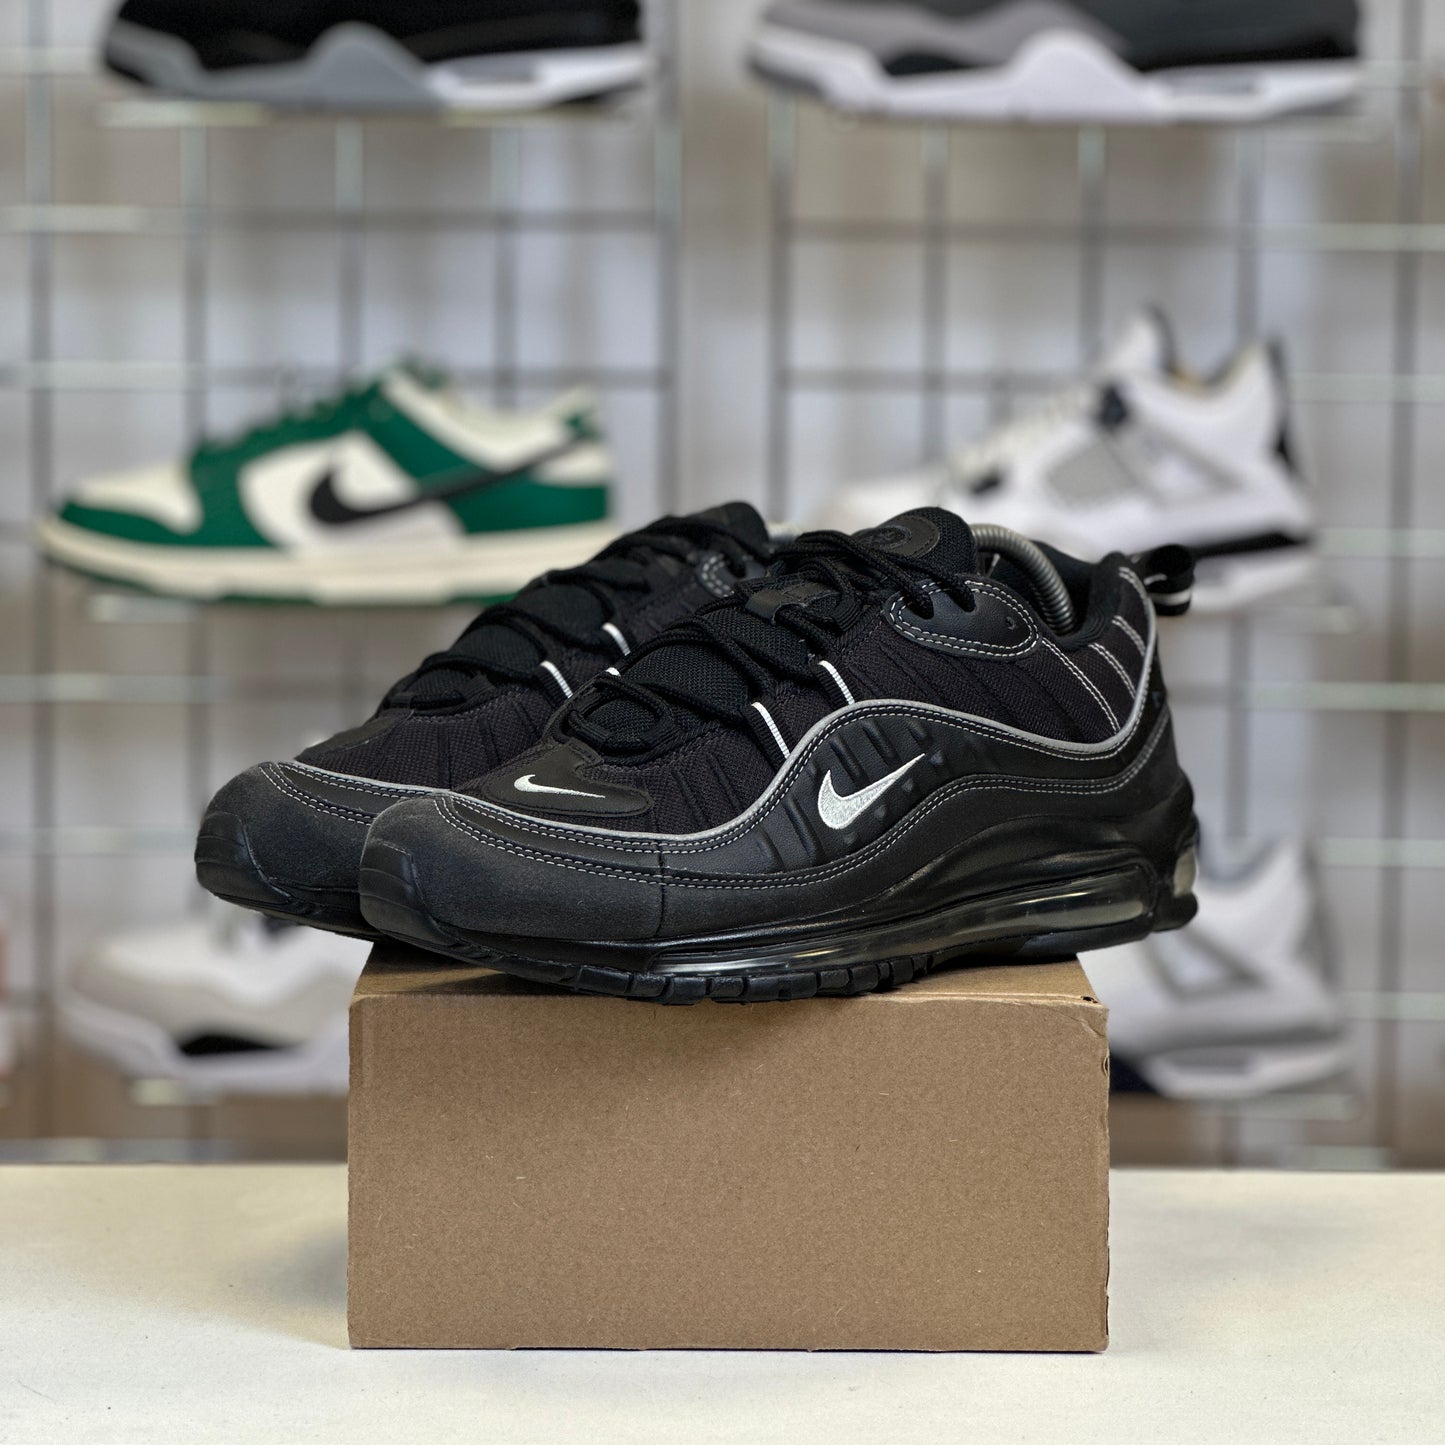 Nike Air Max 98 'Black Oil Grey' UK8.5 (No Box)